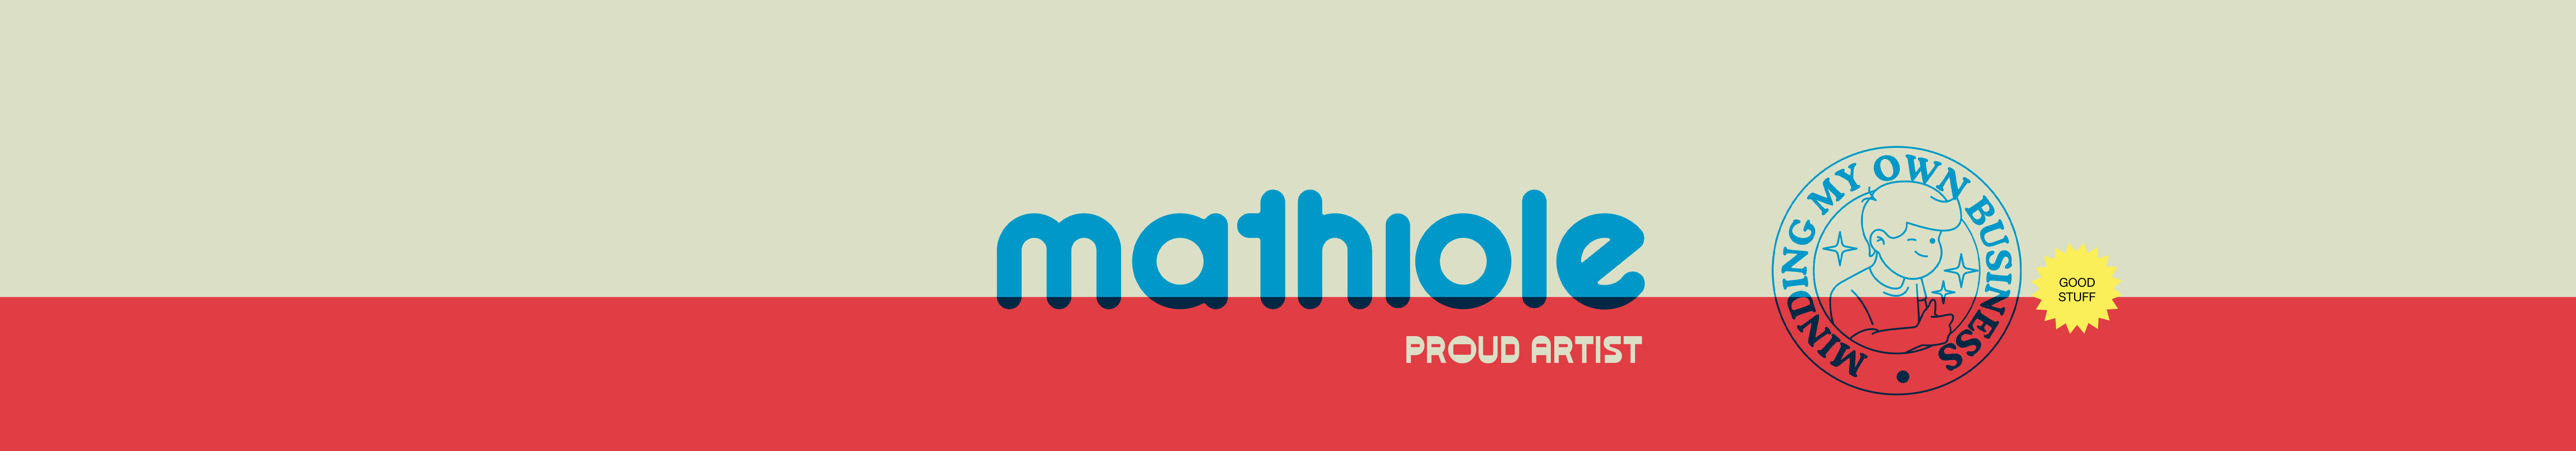 Matheus Lopes's profile banner